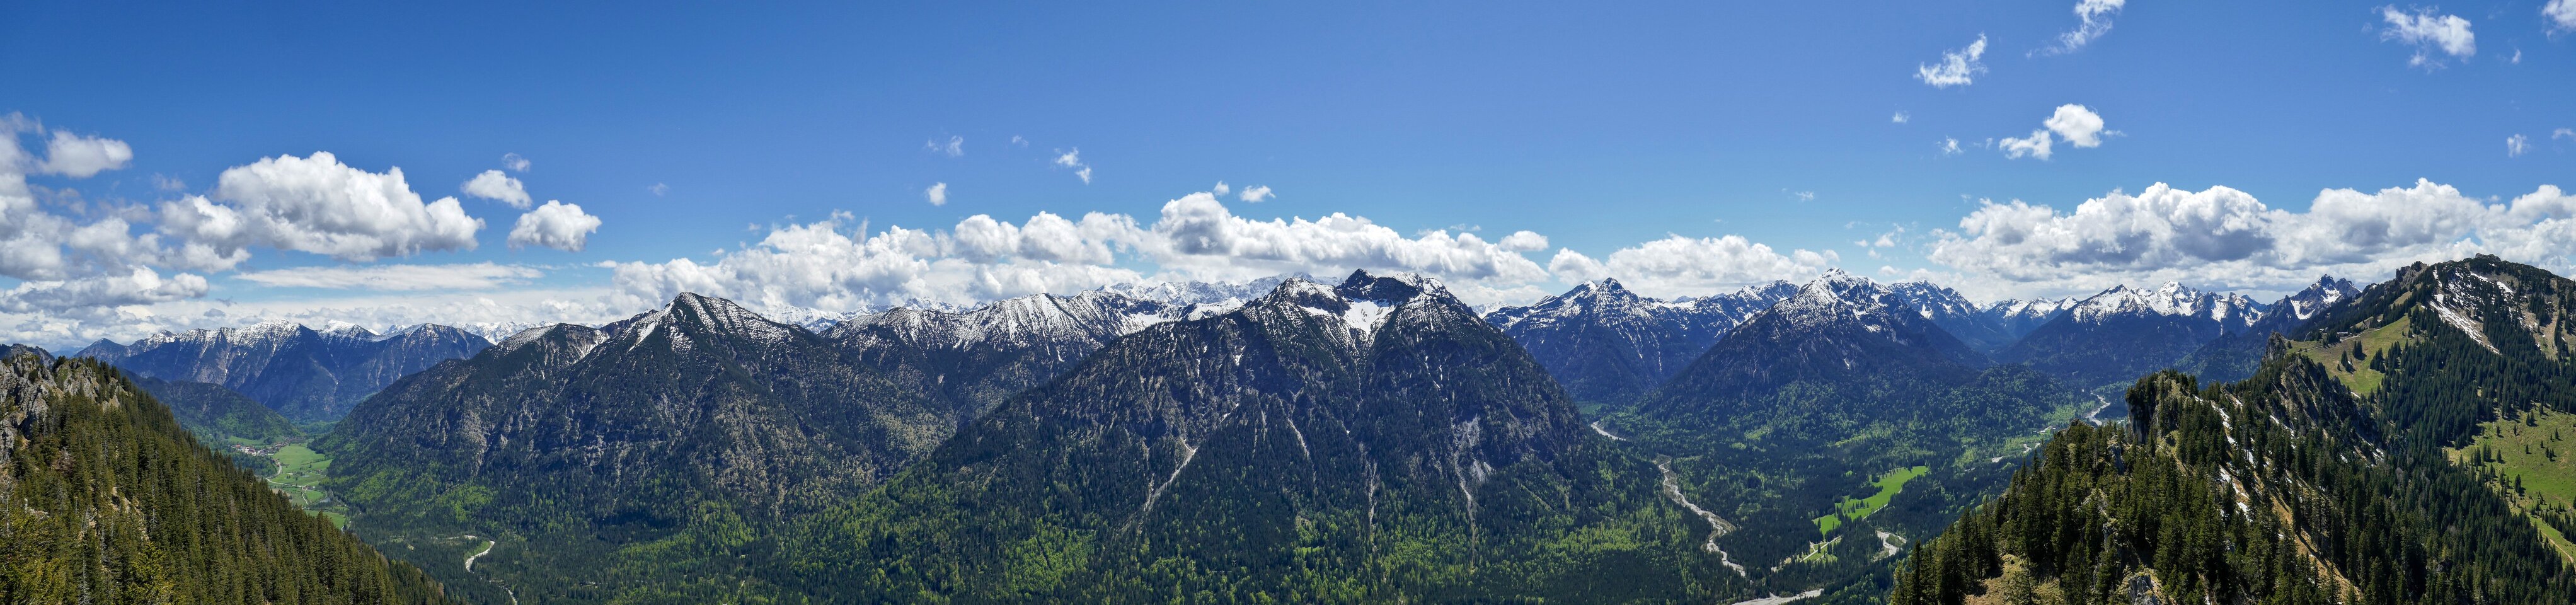 Panorama auf dem Sonnenberg